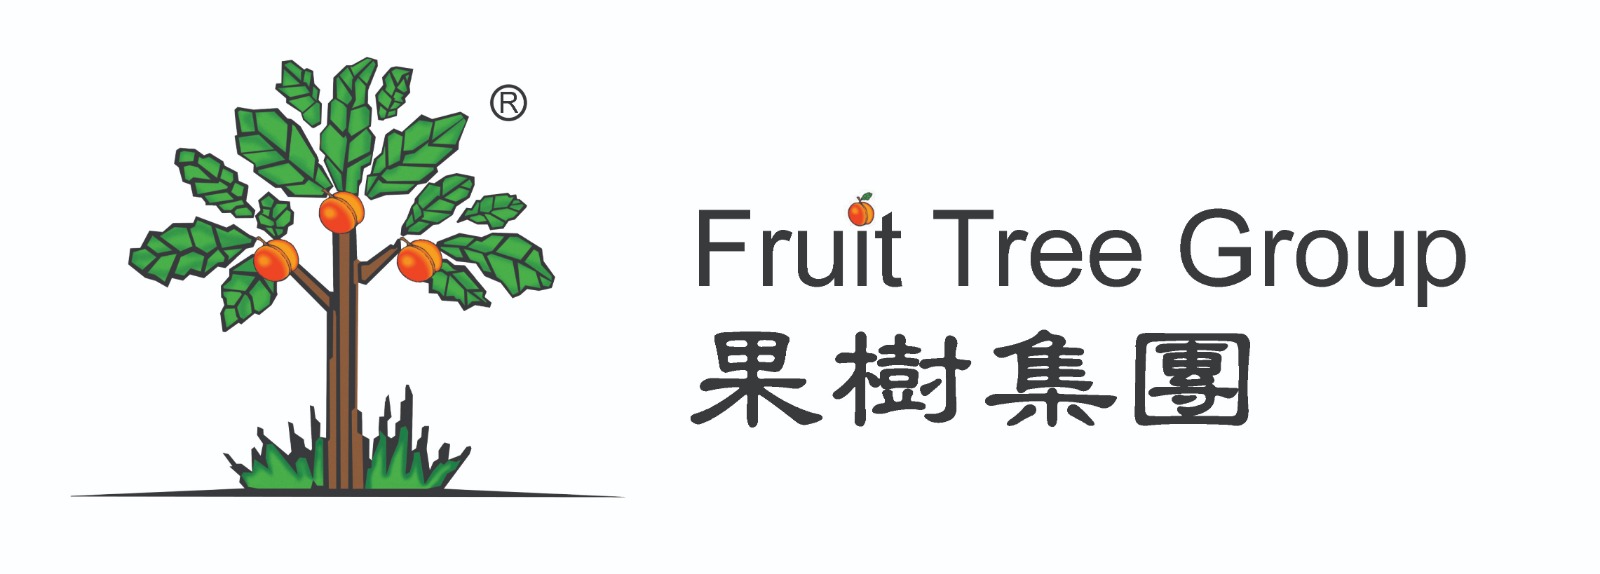 Fruit-Tree-Group.jpeg